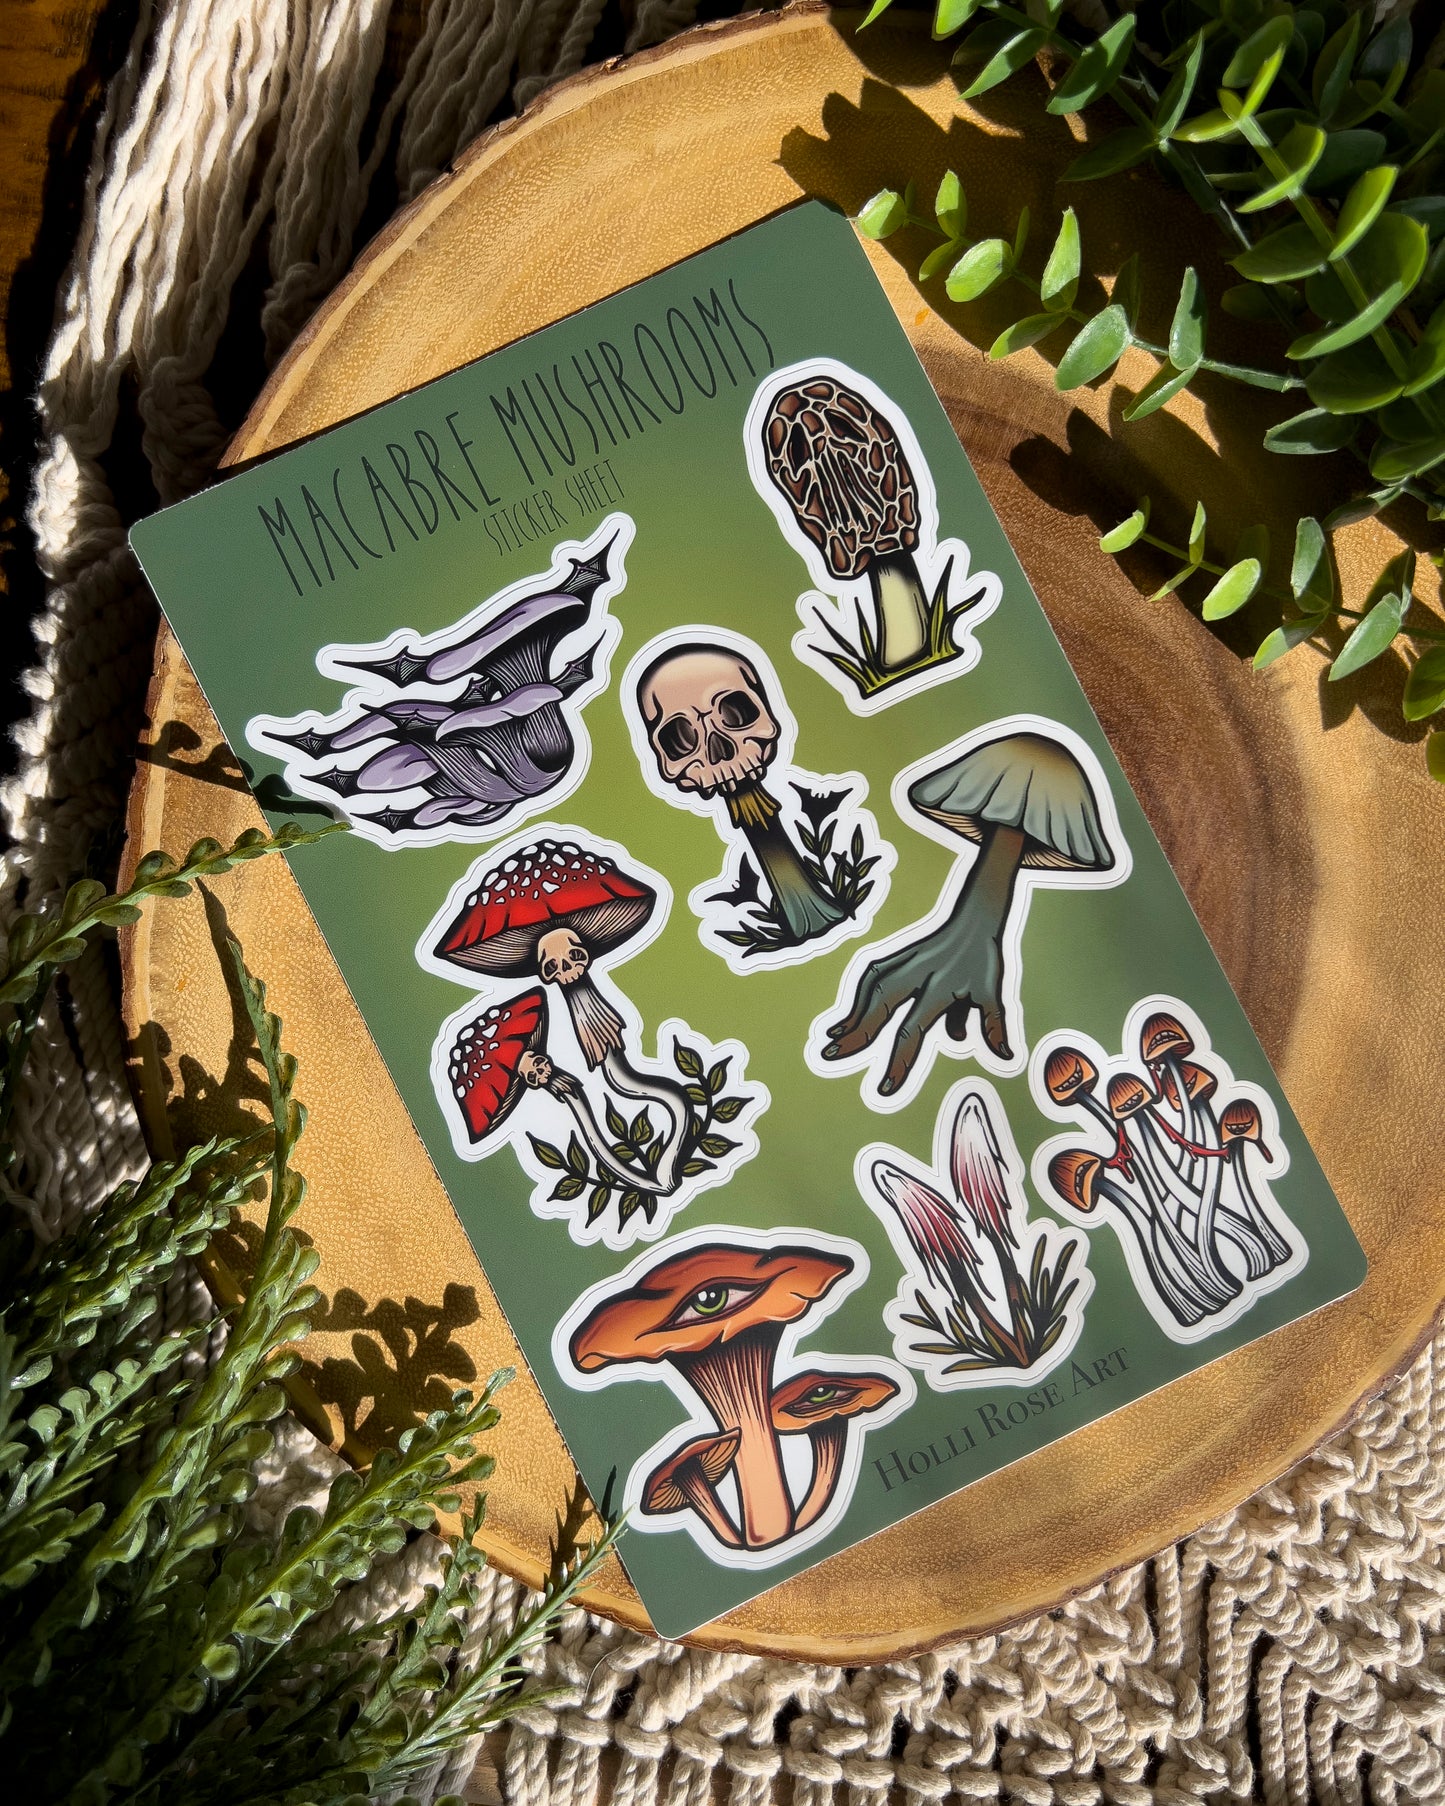 Macabre Mushrooms Sticker Sheet